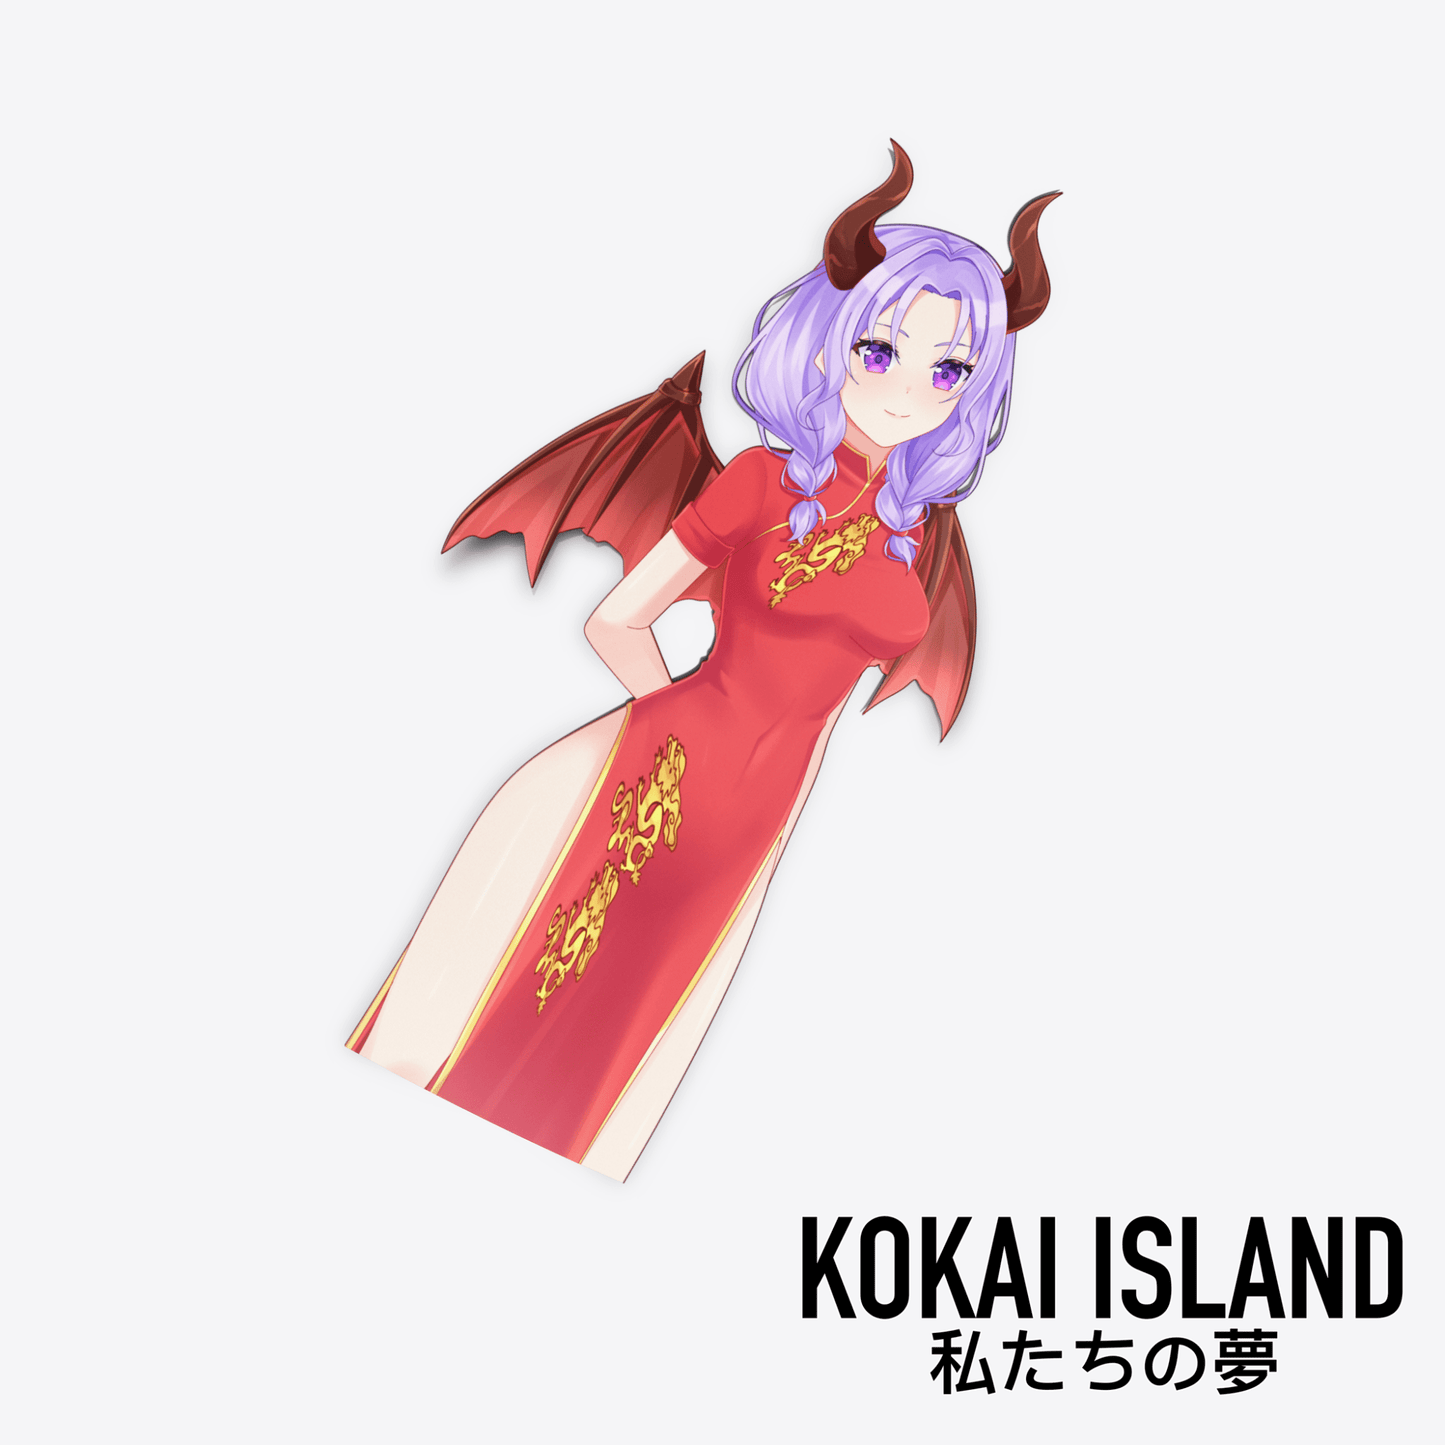 Dragon Koko DecalDecalKokai Island